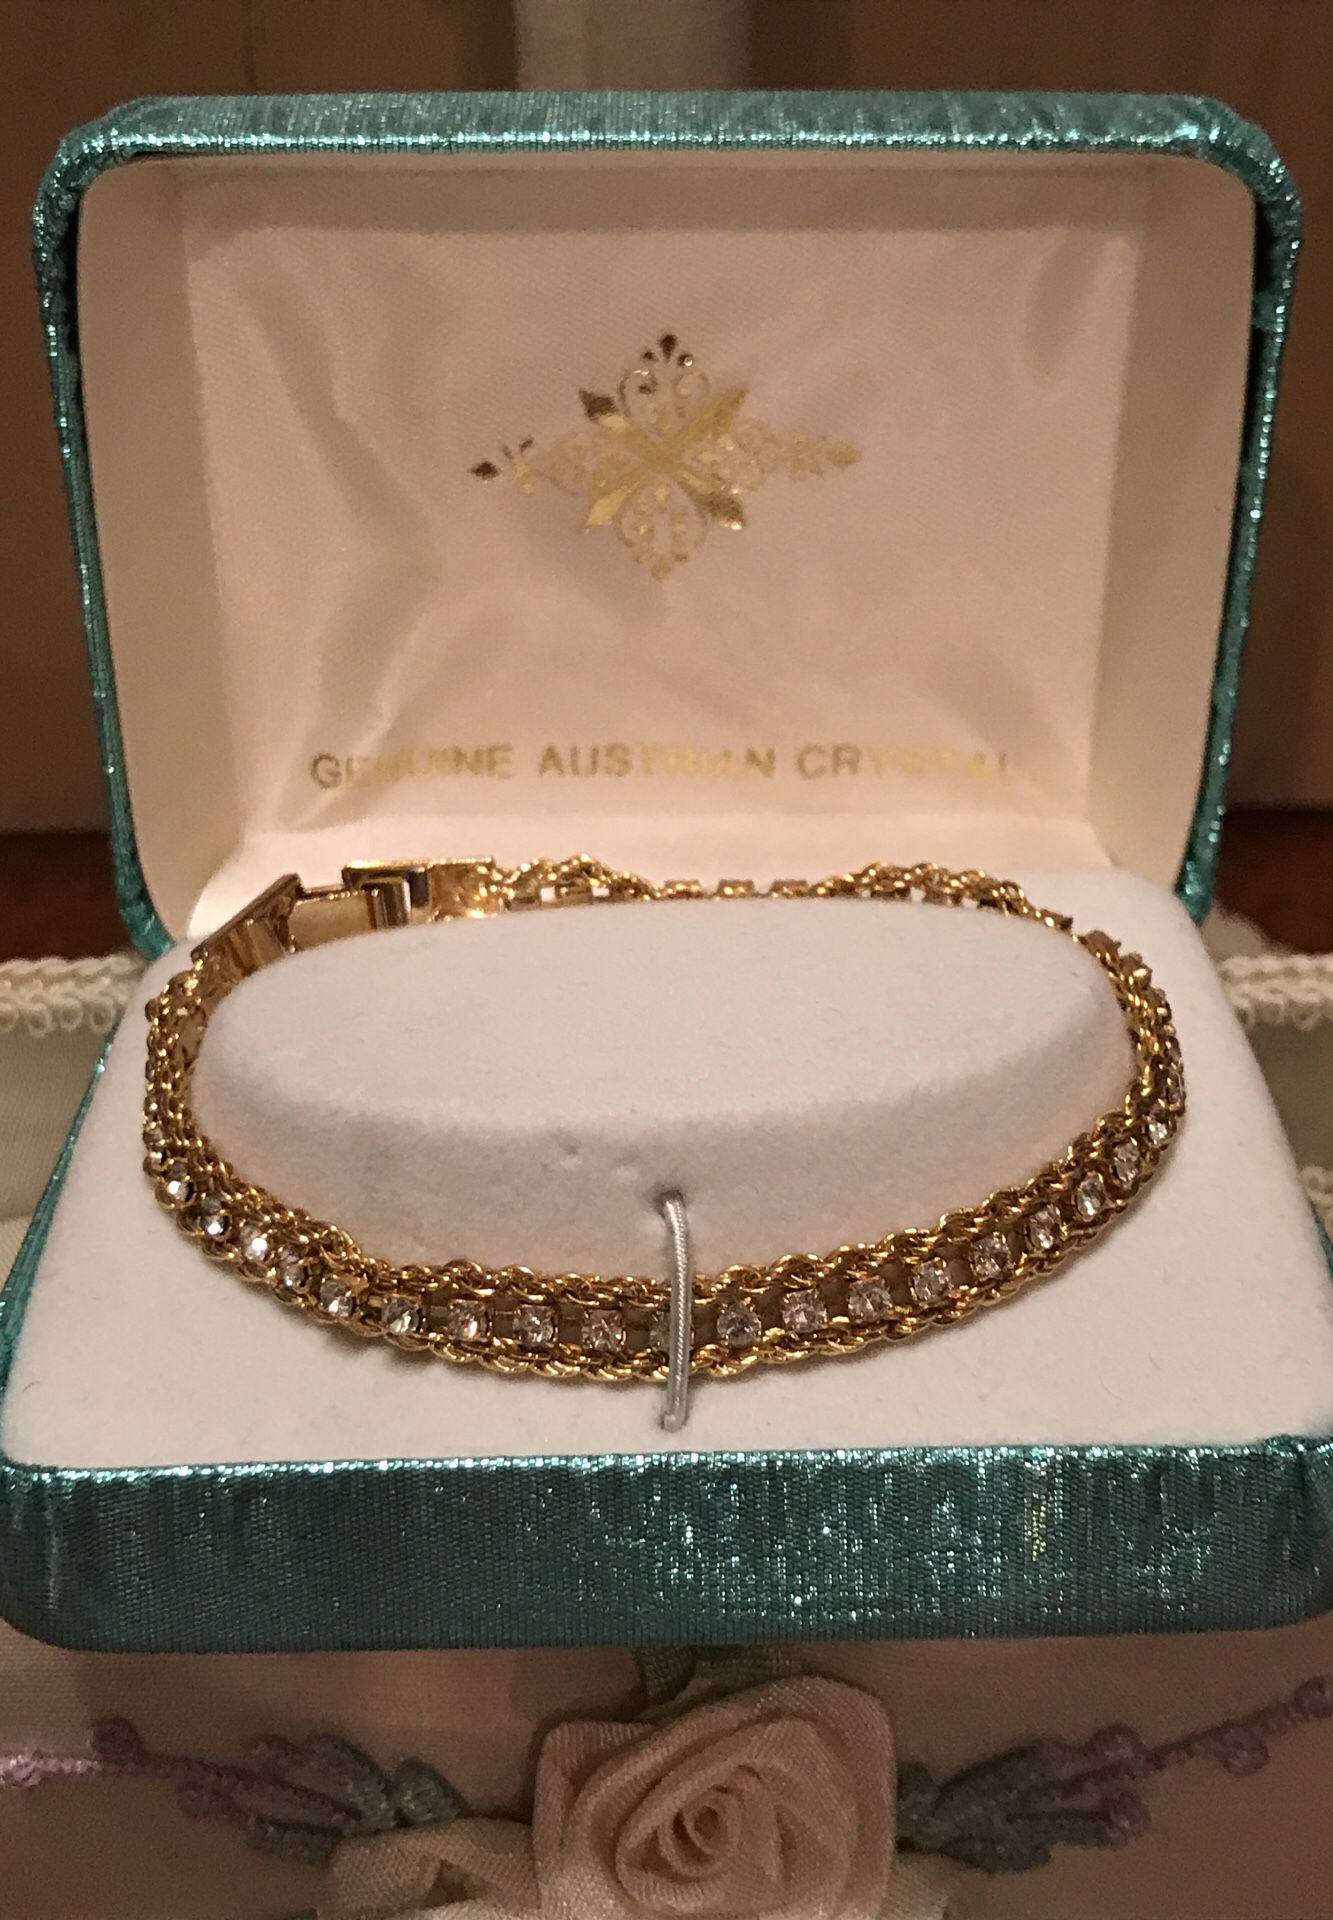 Pretty Genuine Austrian Crystal gold bracelet